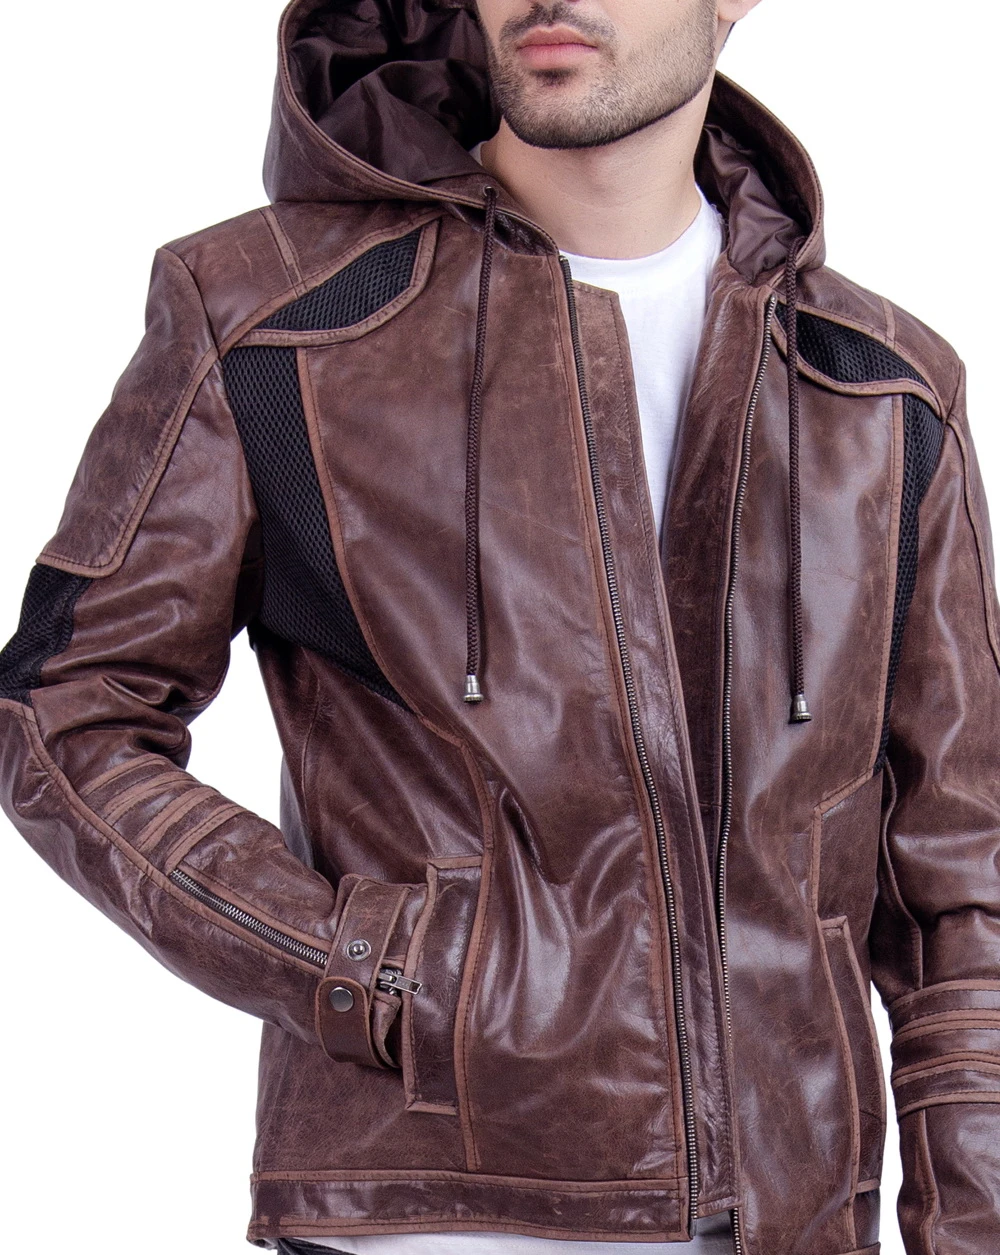 Buy Gavin Reed Leather Jacket